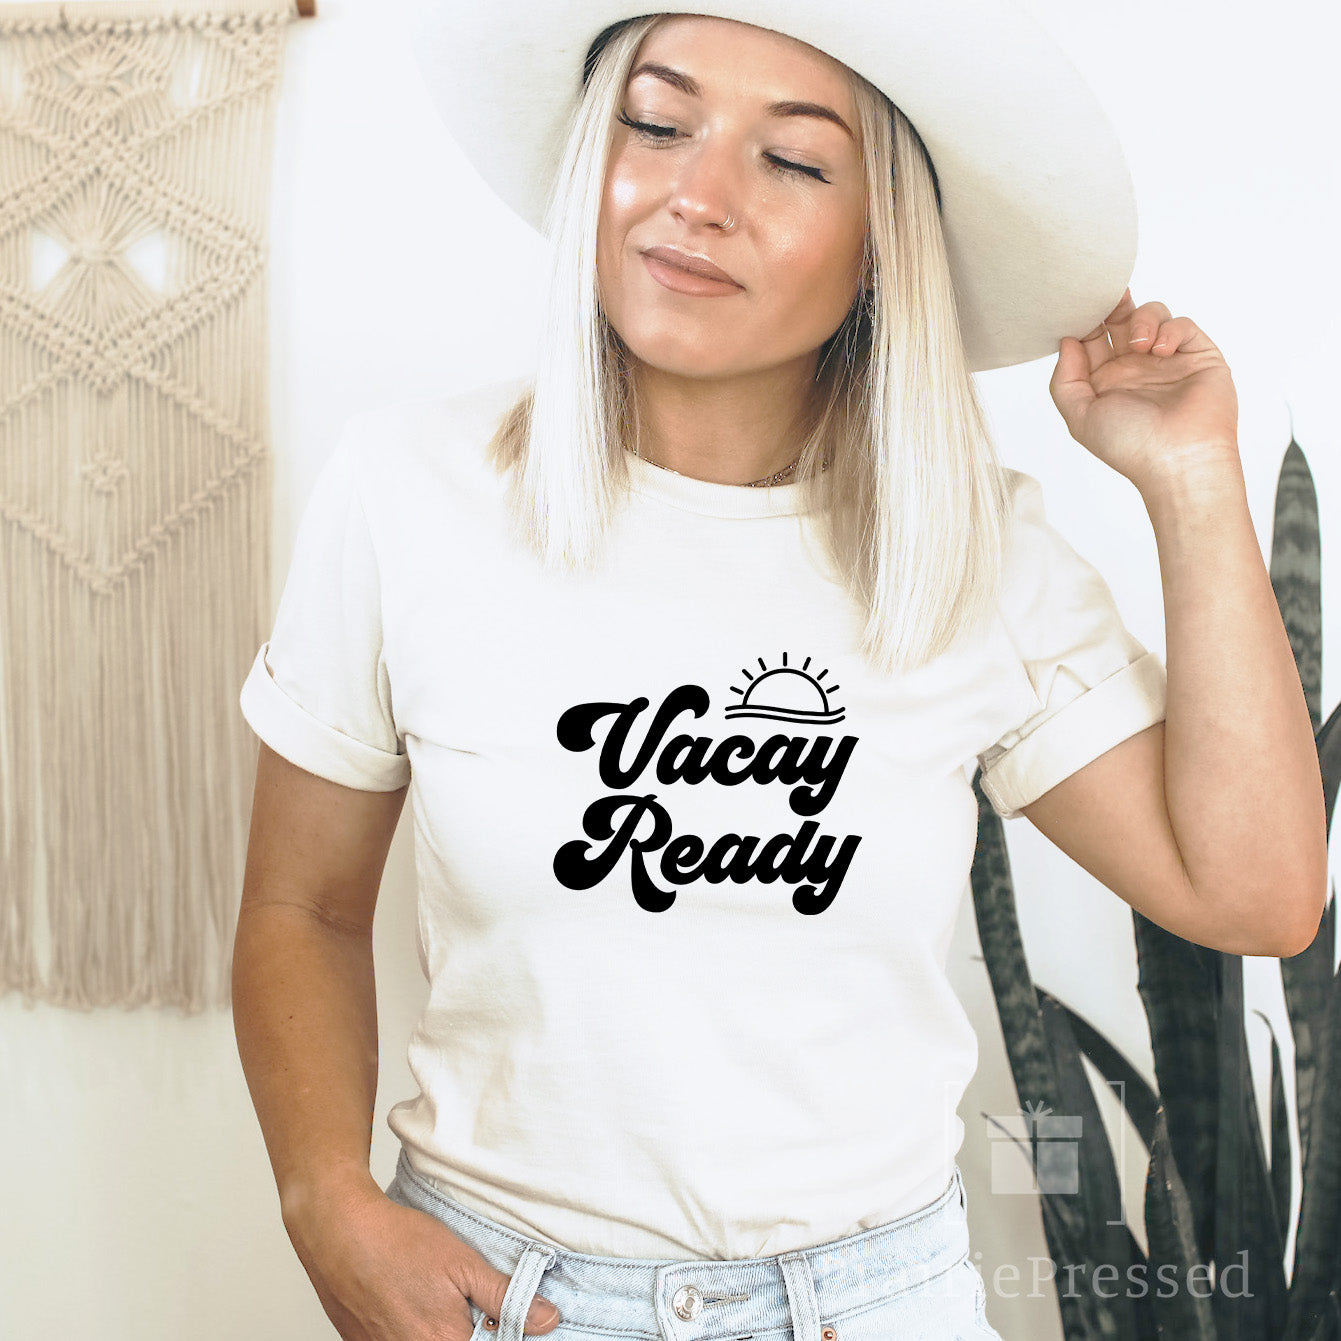 Vacay Ready! Bella Canvas Cotton T Shirt